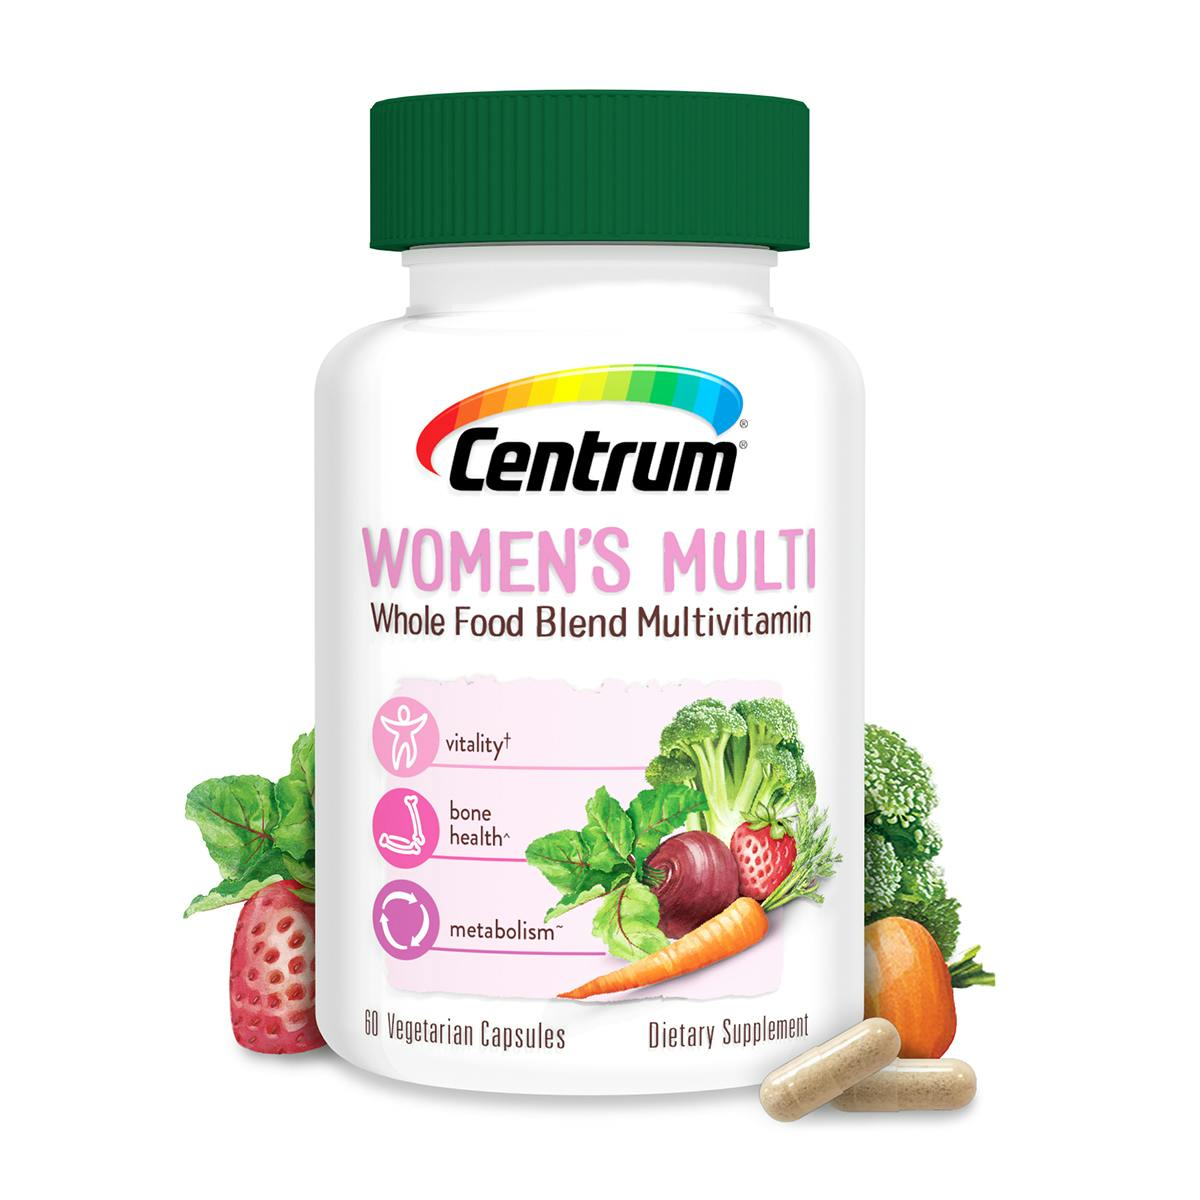 Bottle of Centrum Women's Whole Food Blend Multivitamin